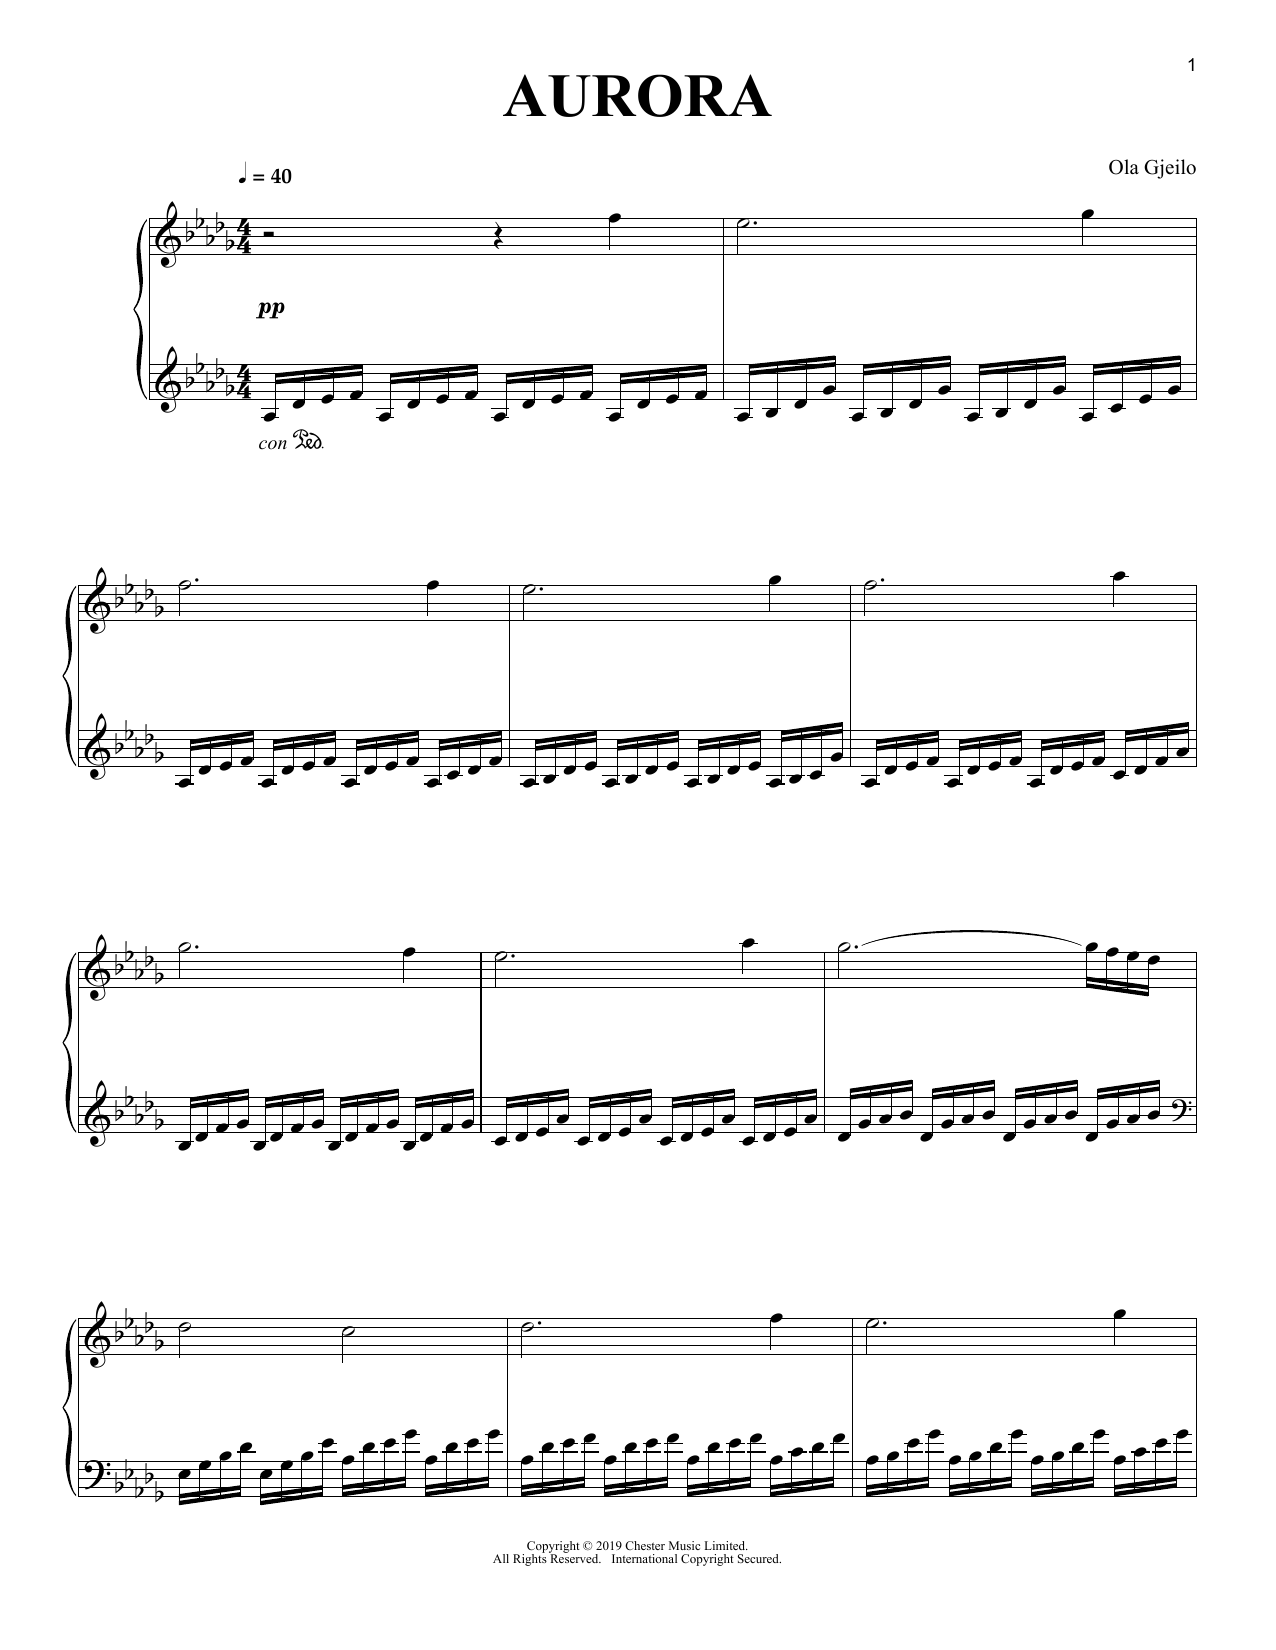 Ola Gjeilo Aurora Sheet Music Notes & Chords for Piano Solo - Download or Print PDF